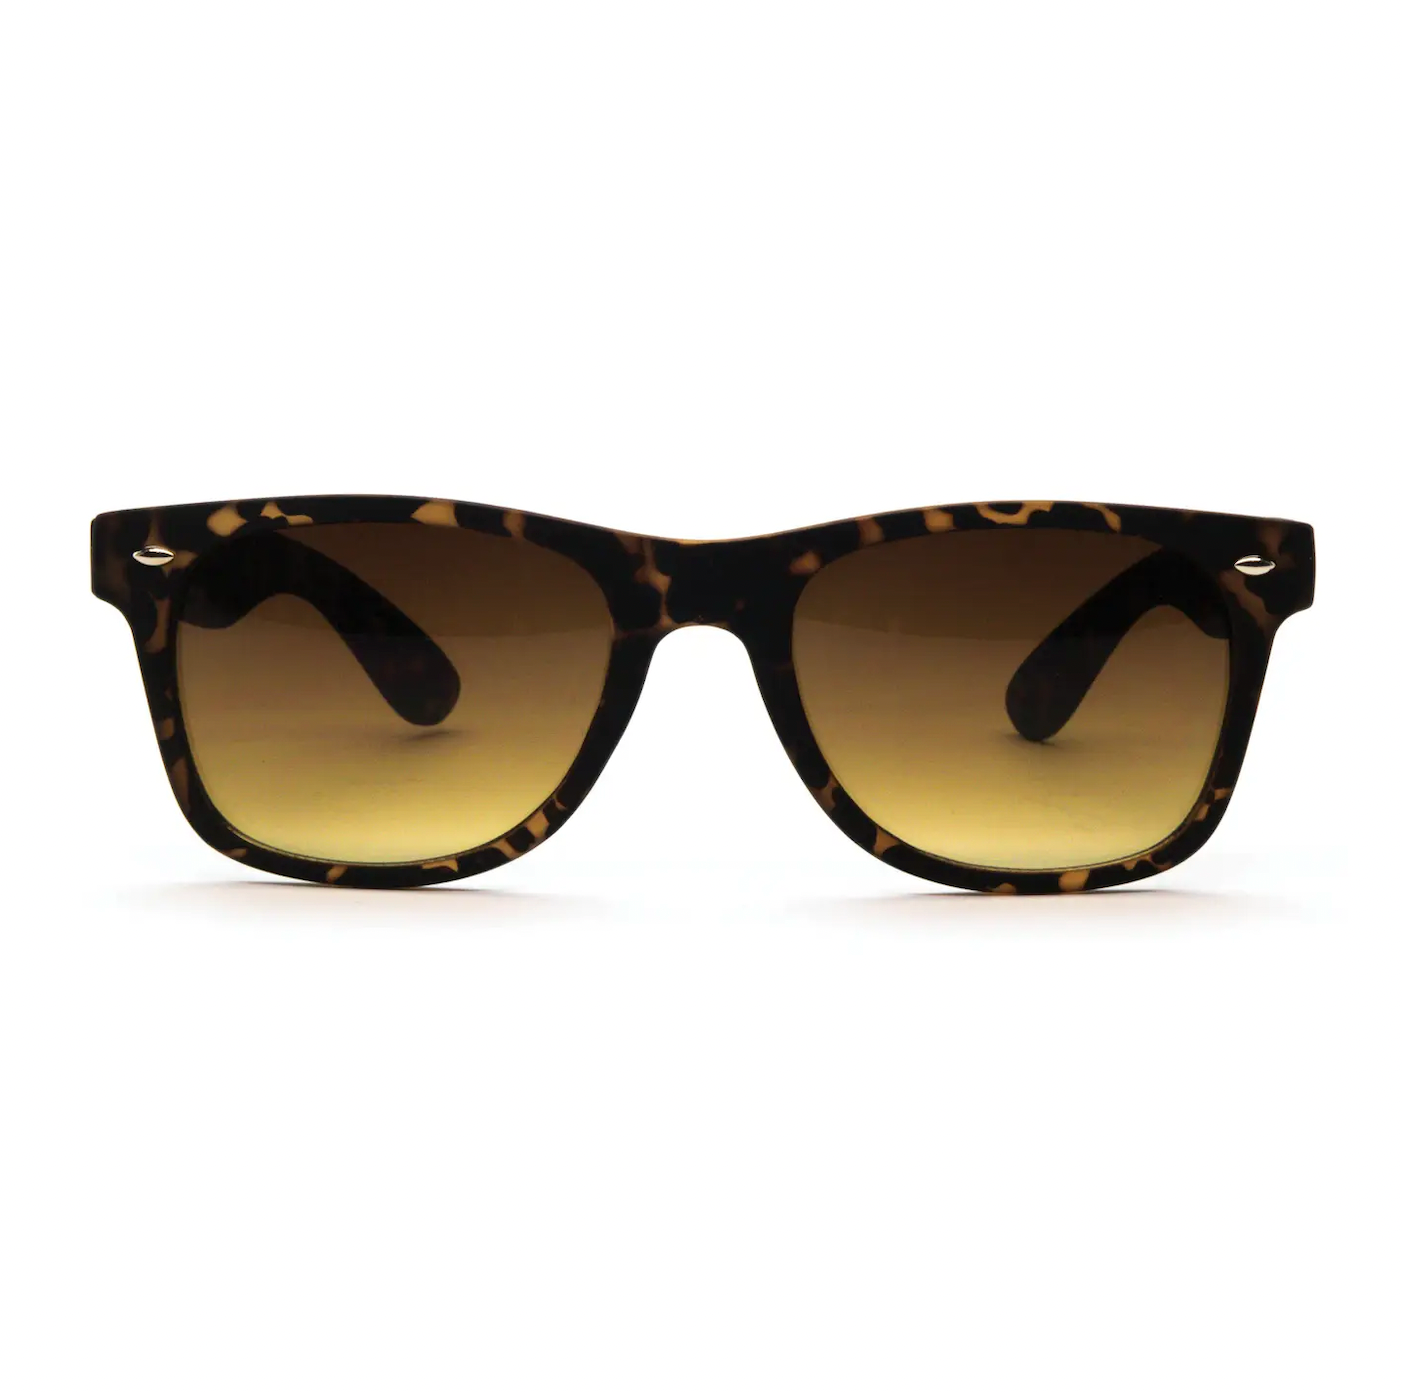 Optimum Optical Sunglasses-Sandbox